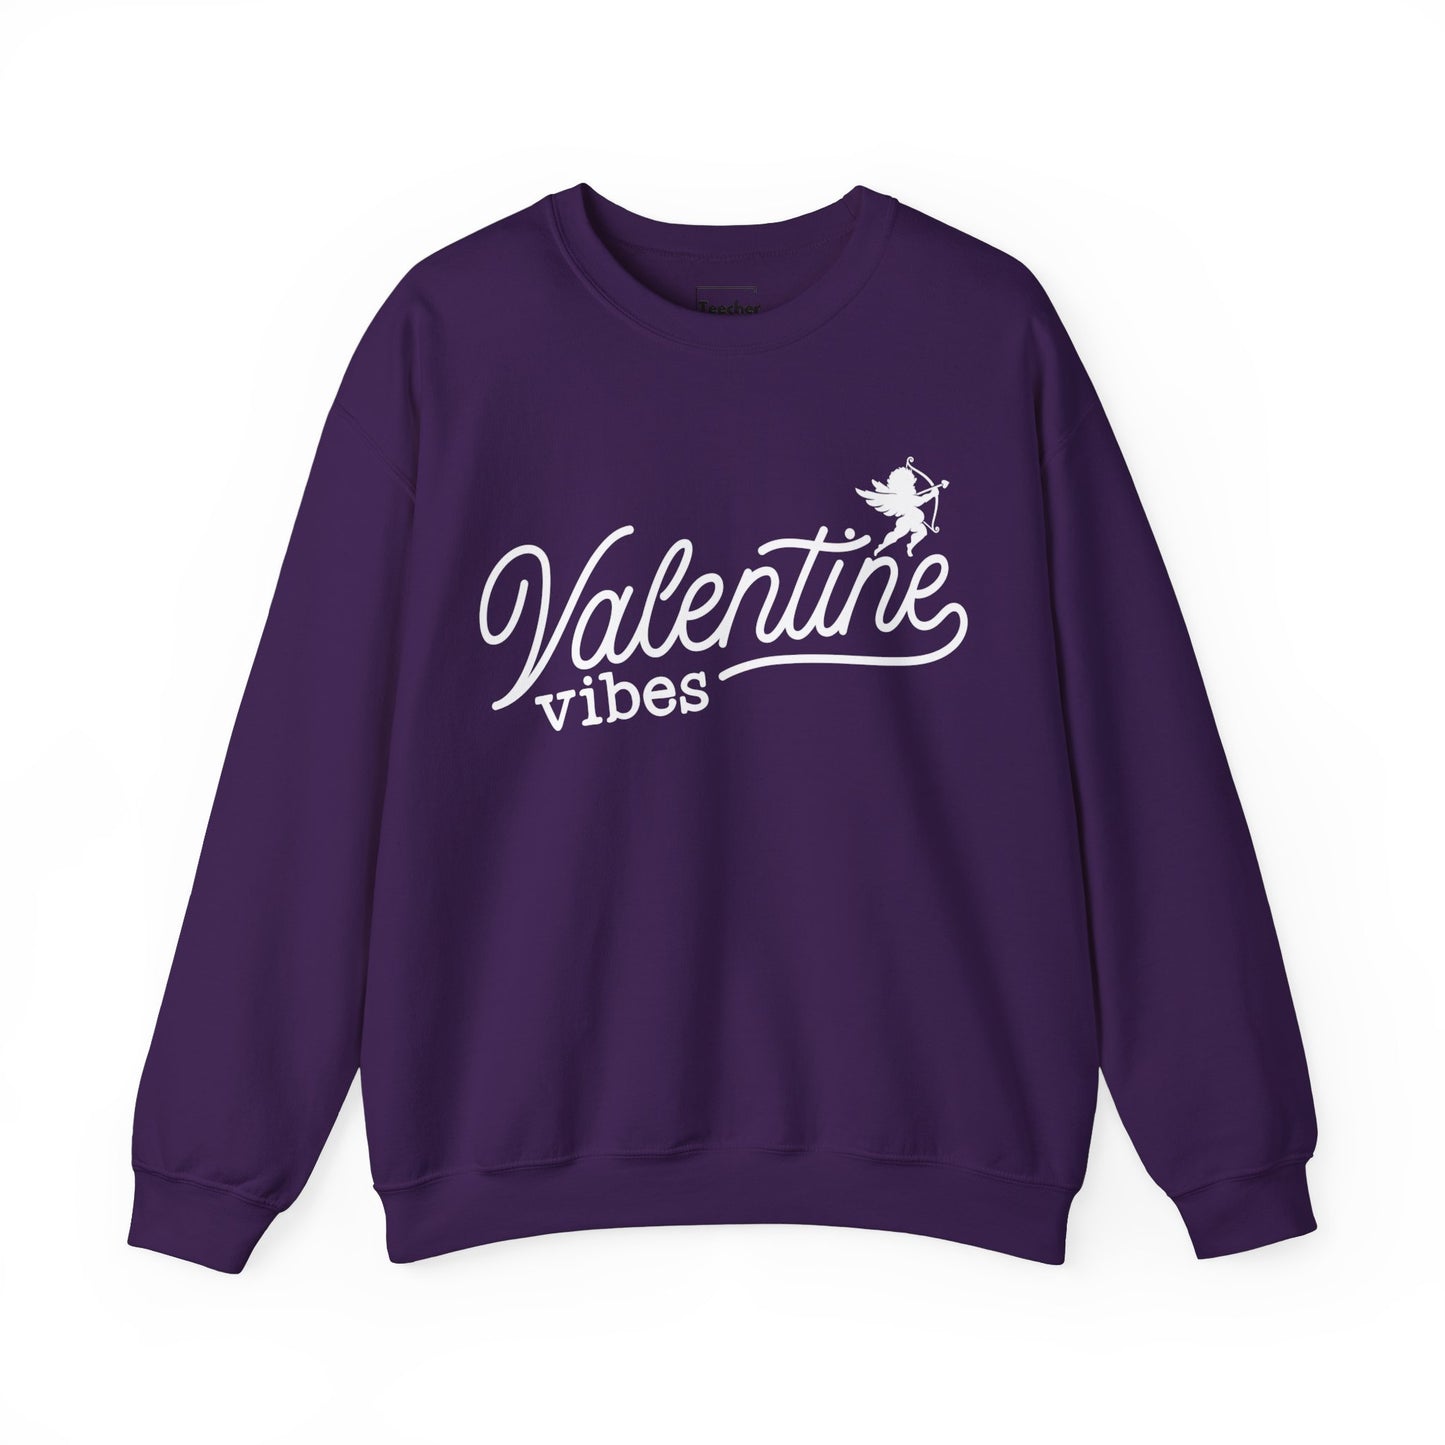 Valentine Vibes Sweatshirt